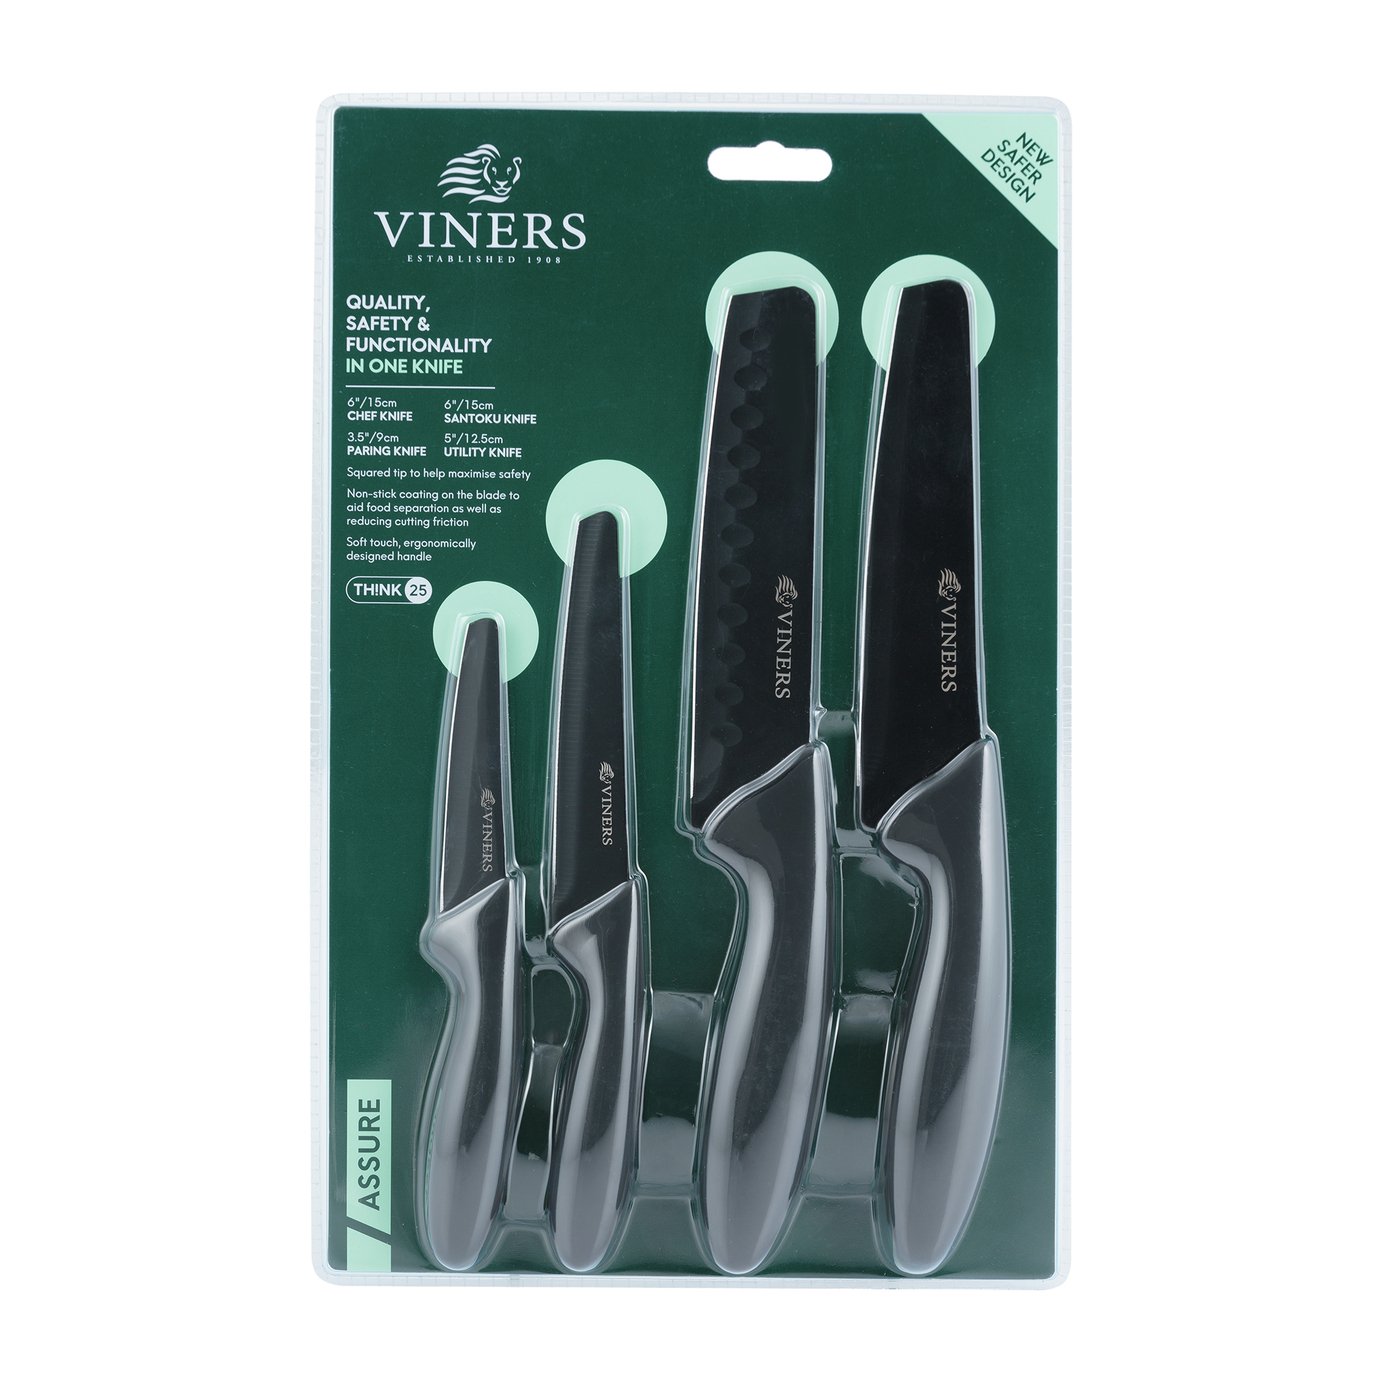 Viners Assure 4 Piece Knife Set Review